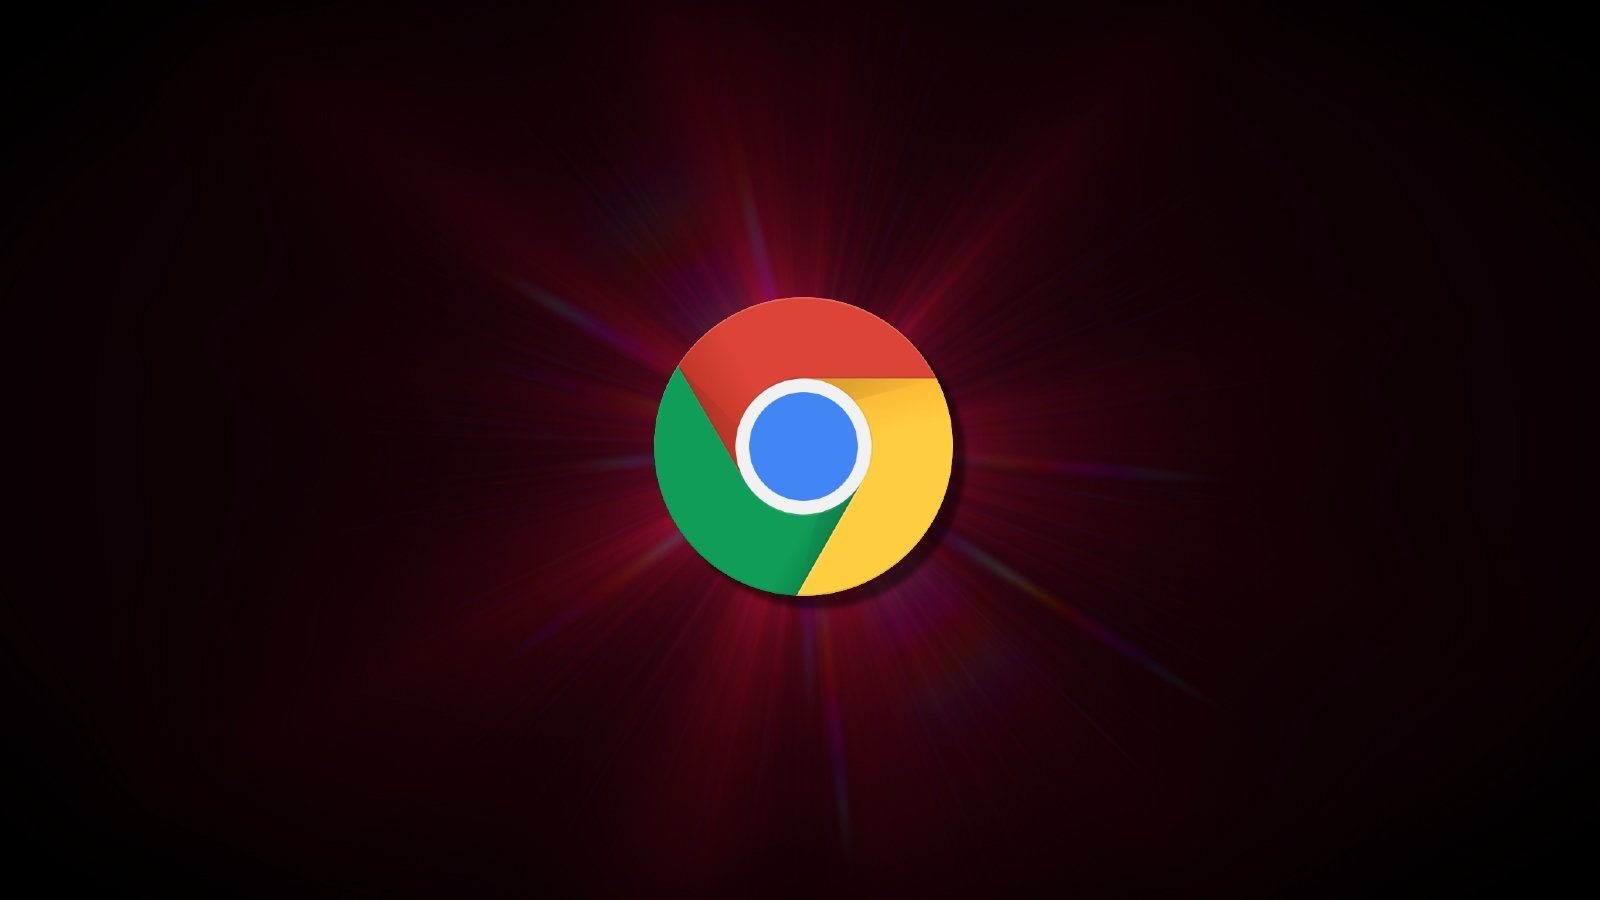 Browser developers push back on Google’s “web DRM” WEI API – Source: www.bleepingcomputer.com